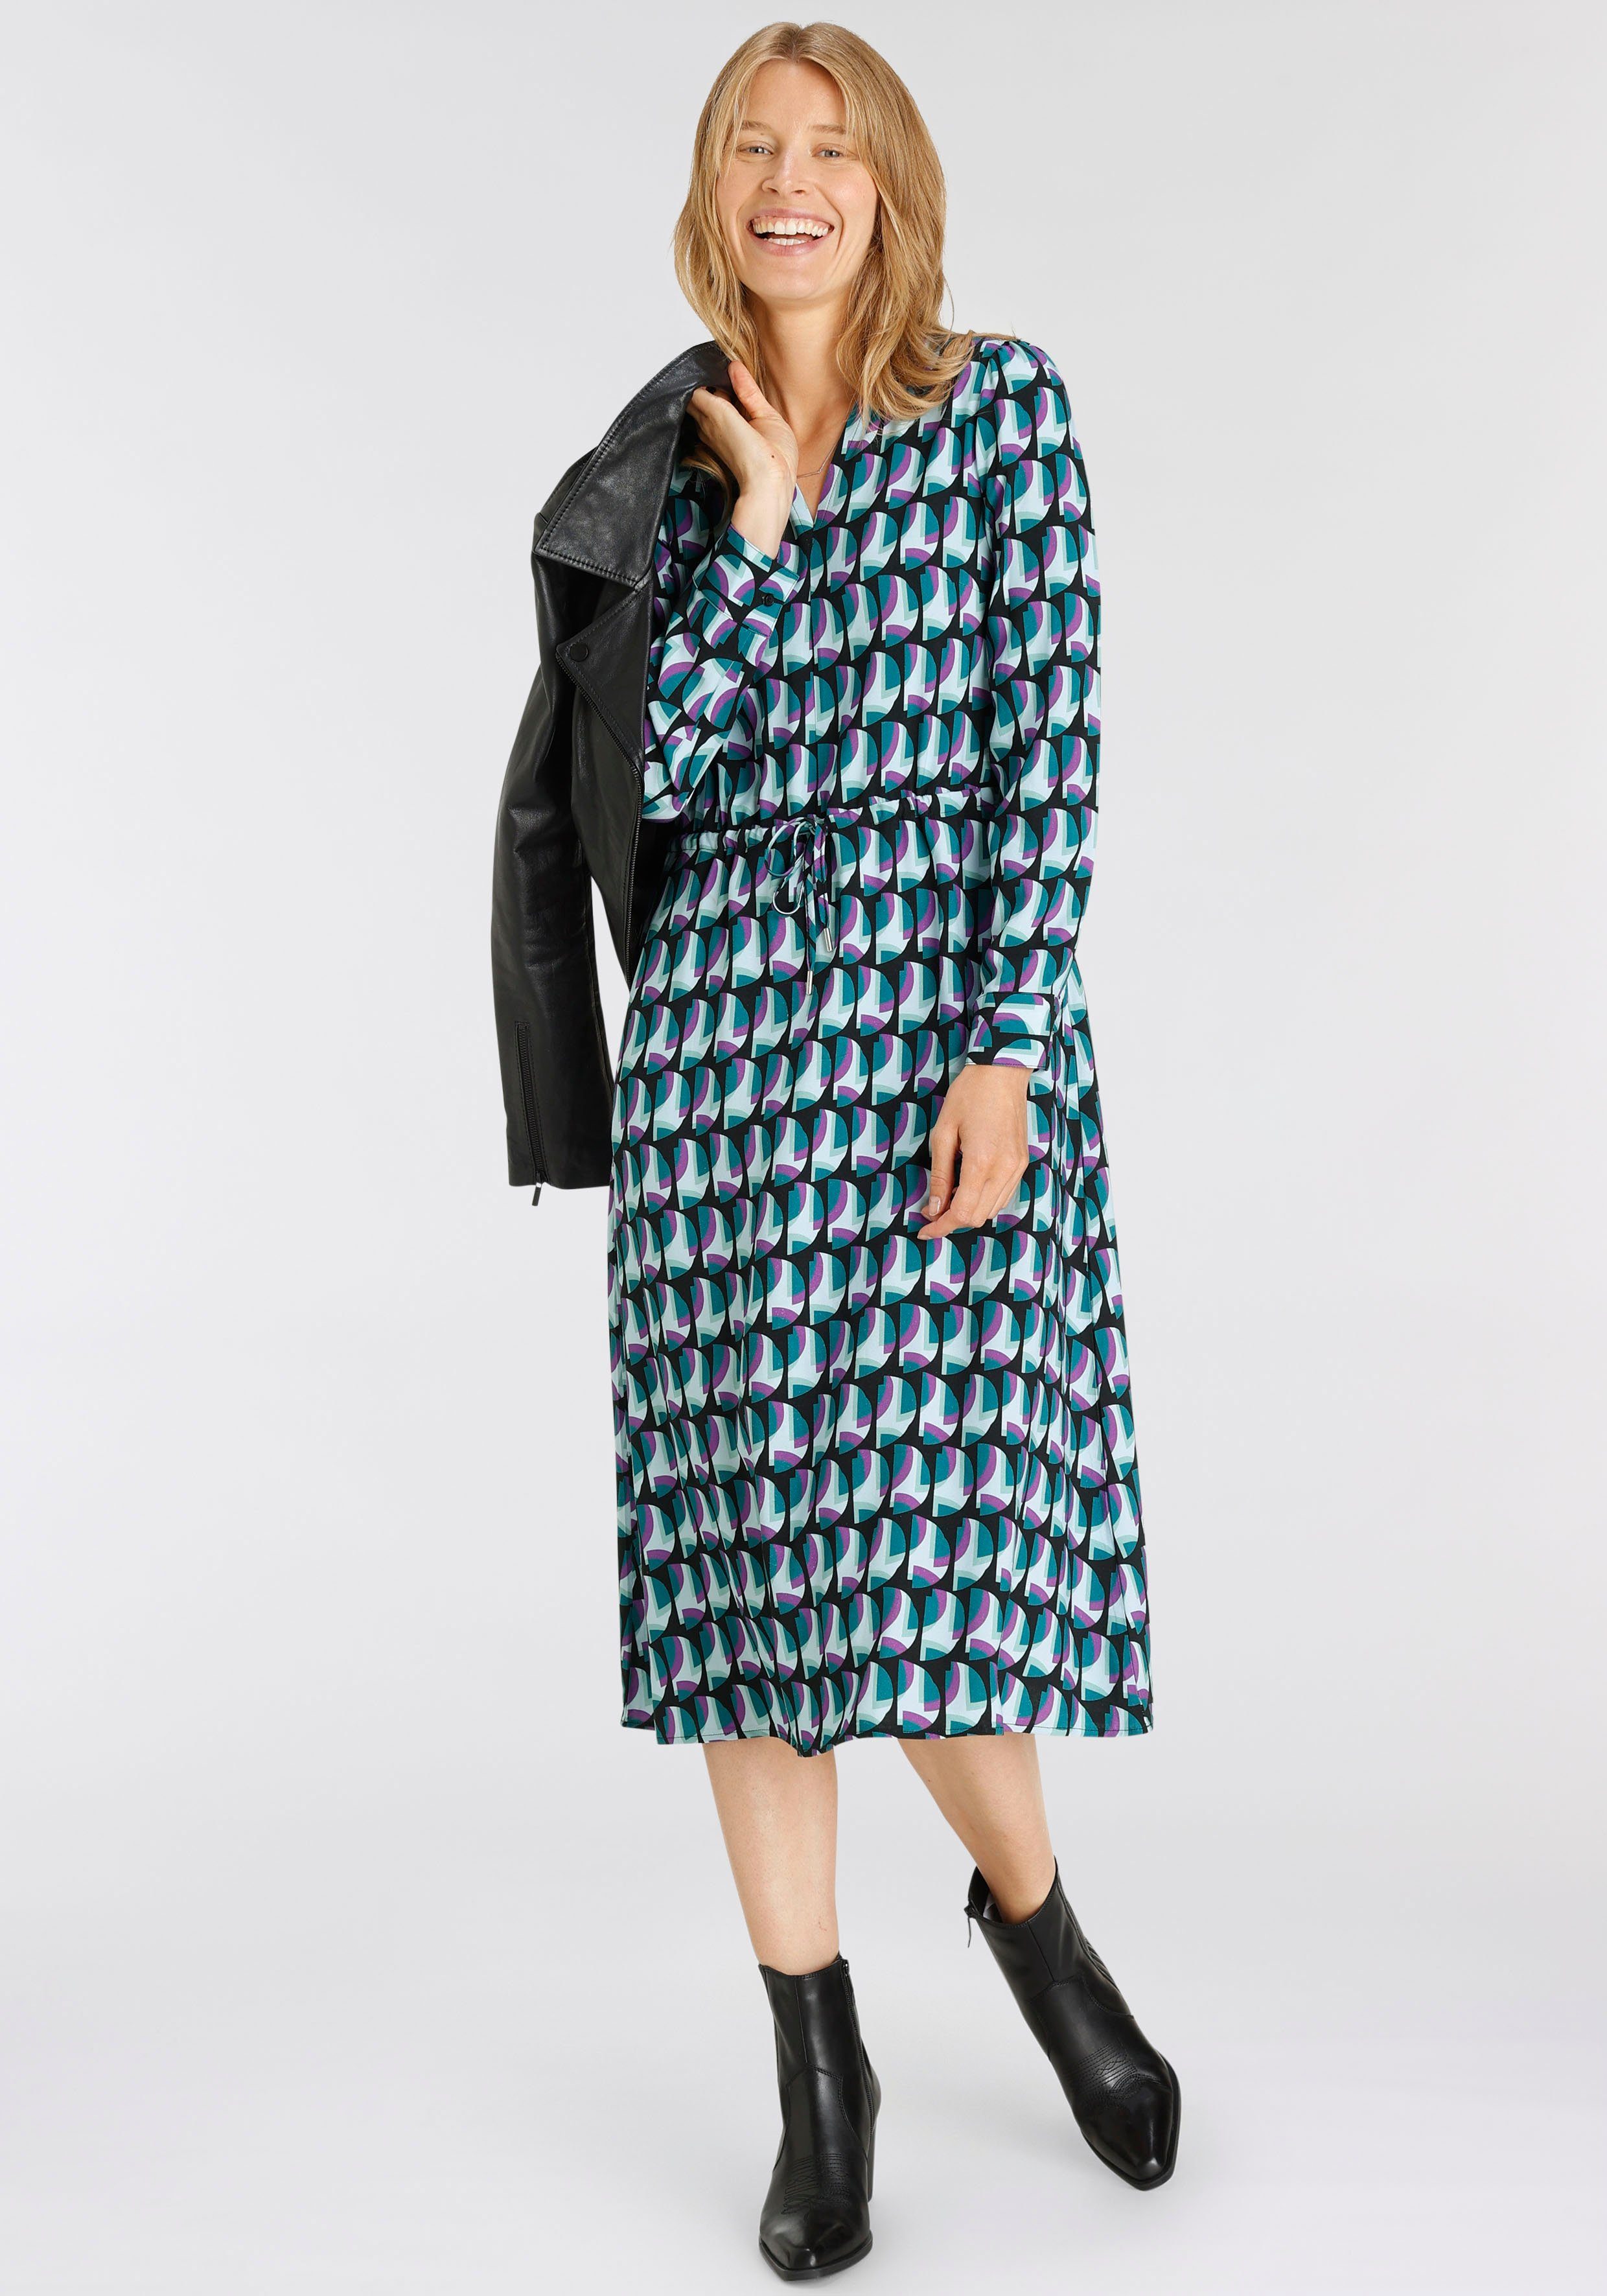 HECHTER PARIS Hemdblusenkleid mit Allover-Print elegantem